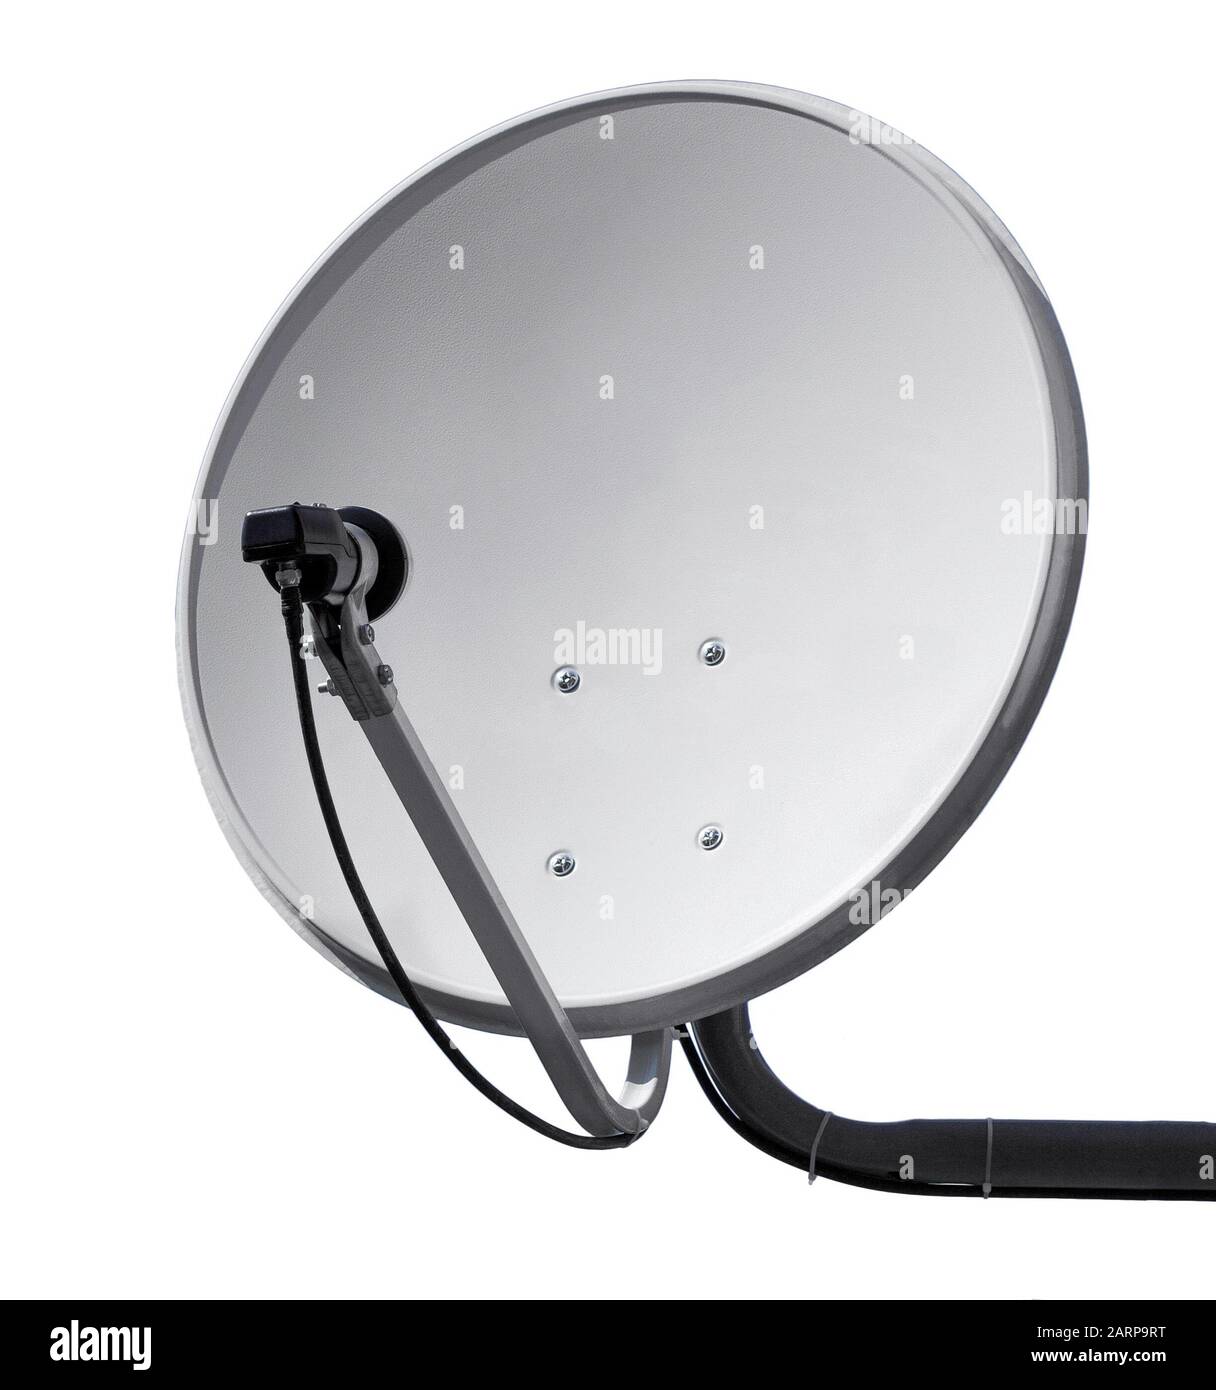 Satellite dish aerial antenna isolated on white background. Stock Photo